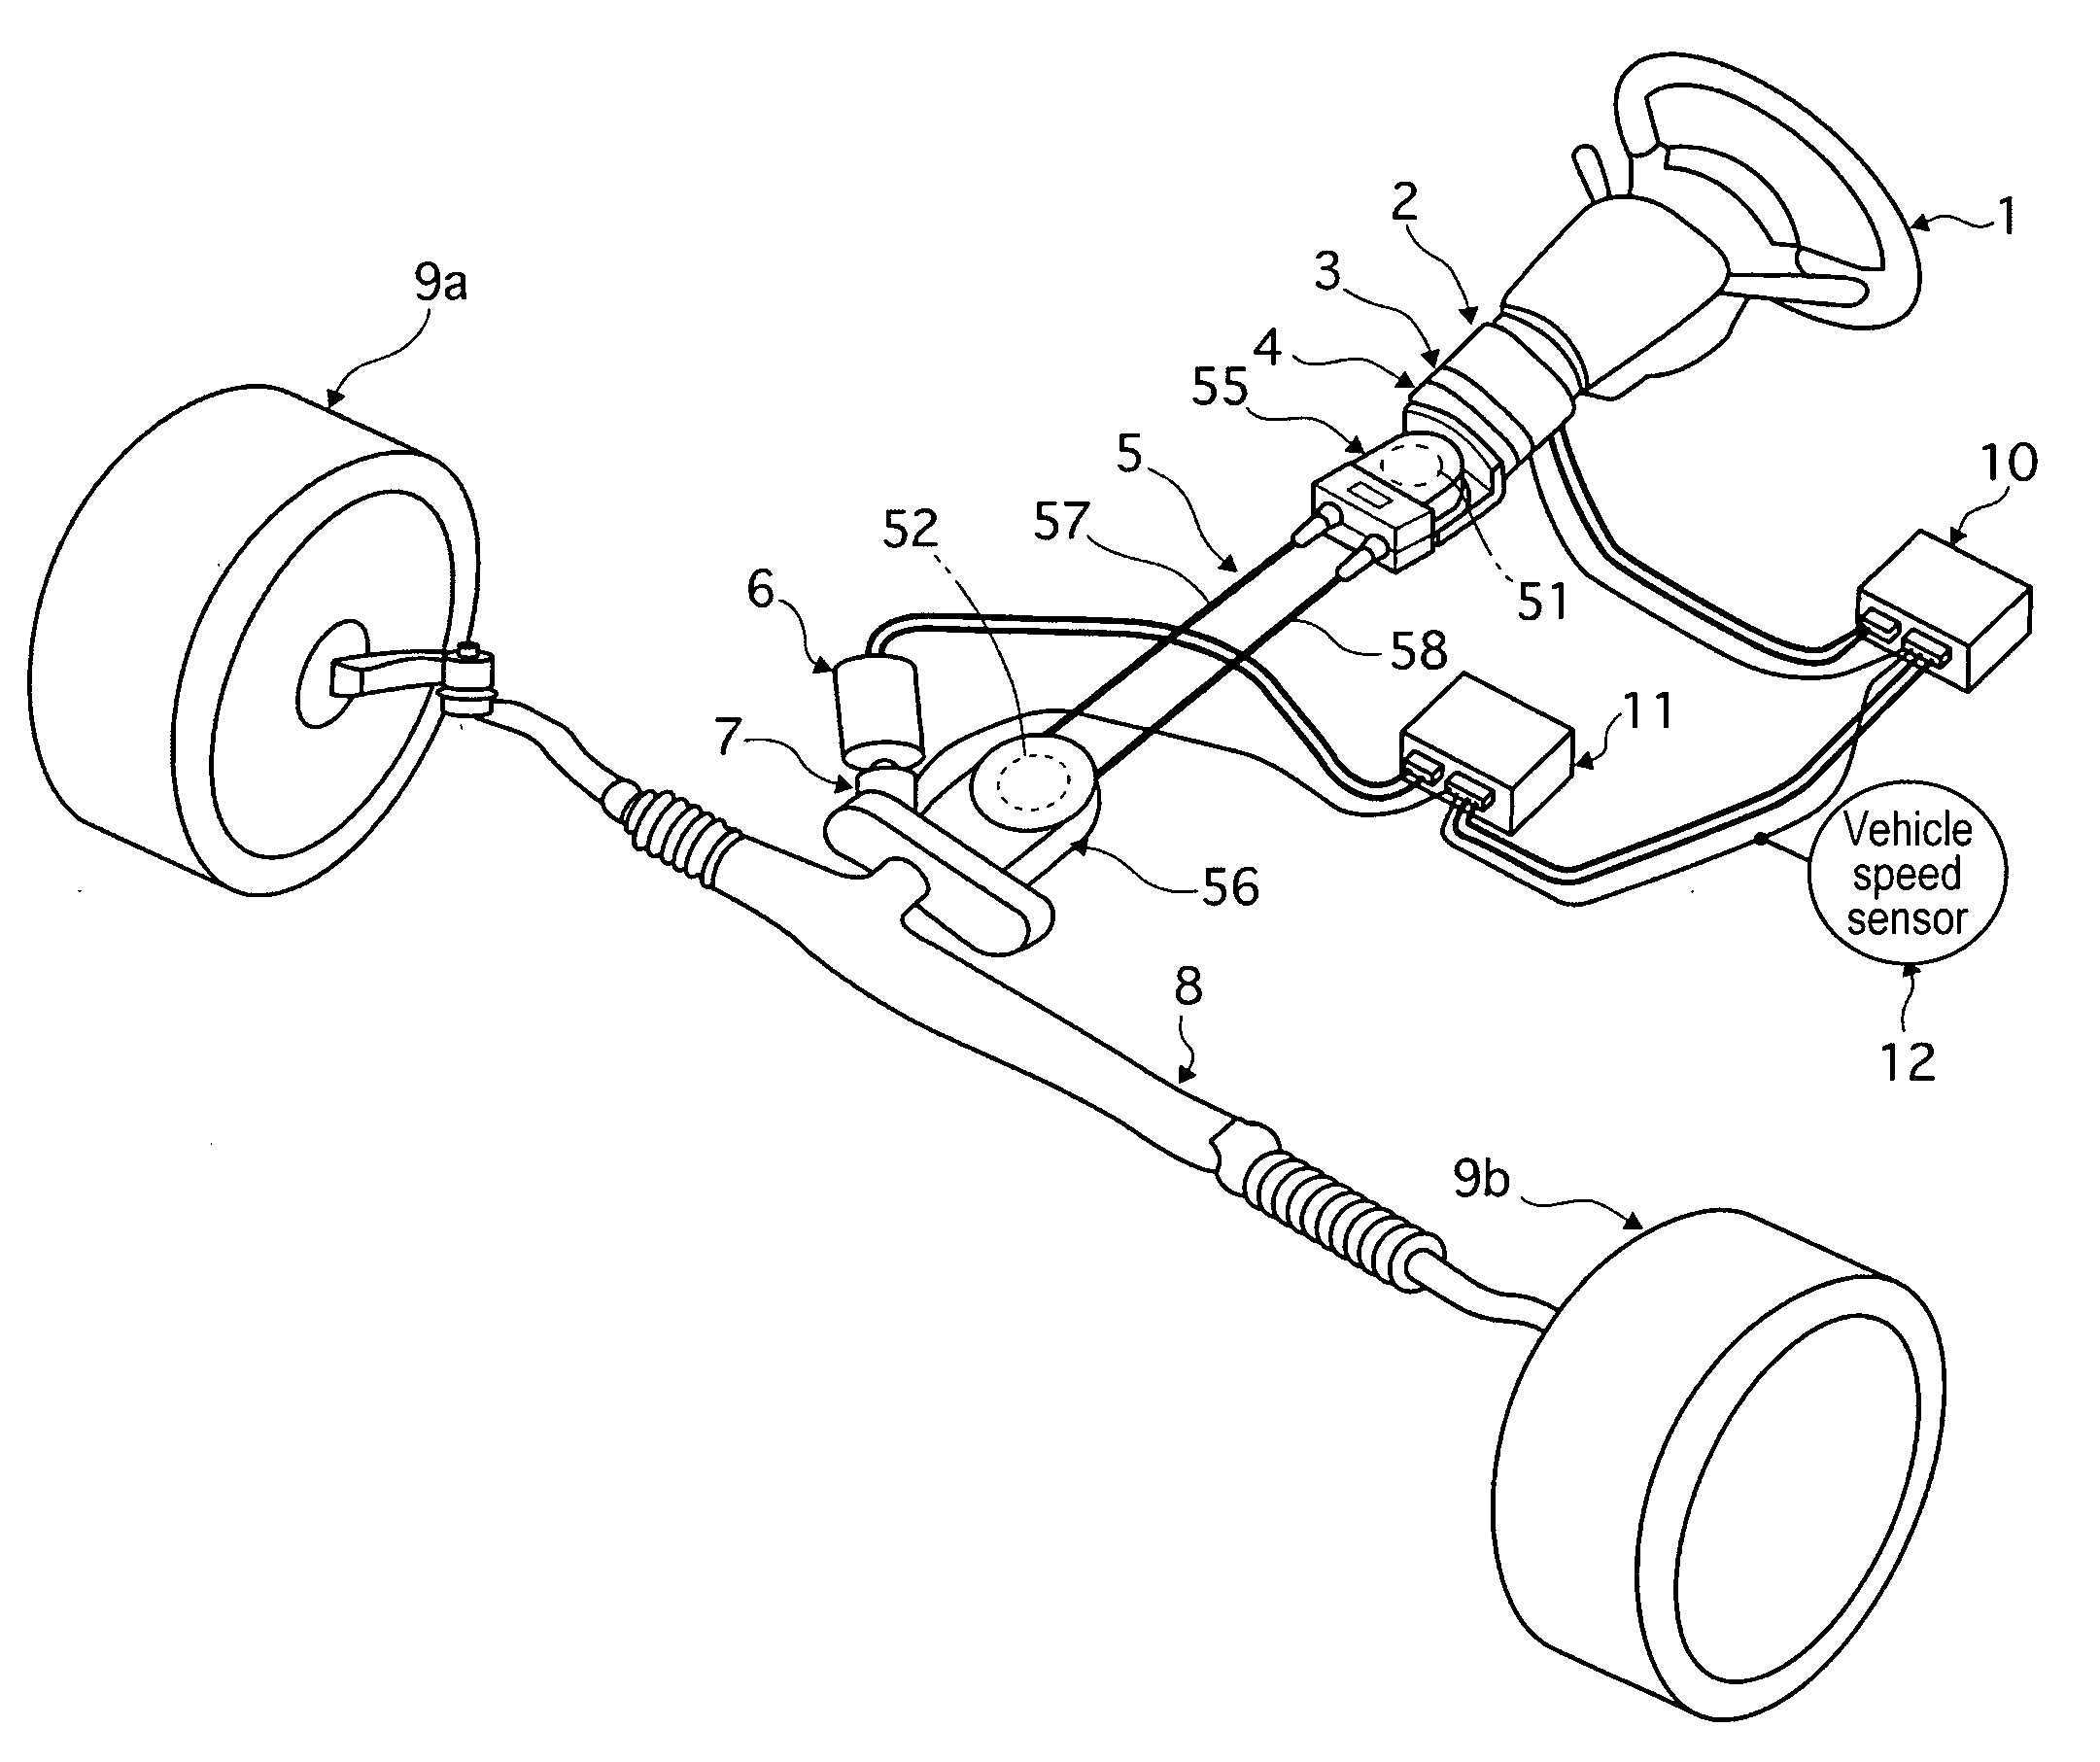 Steering device